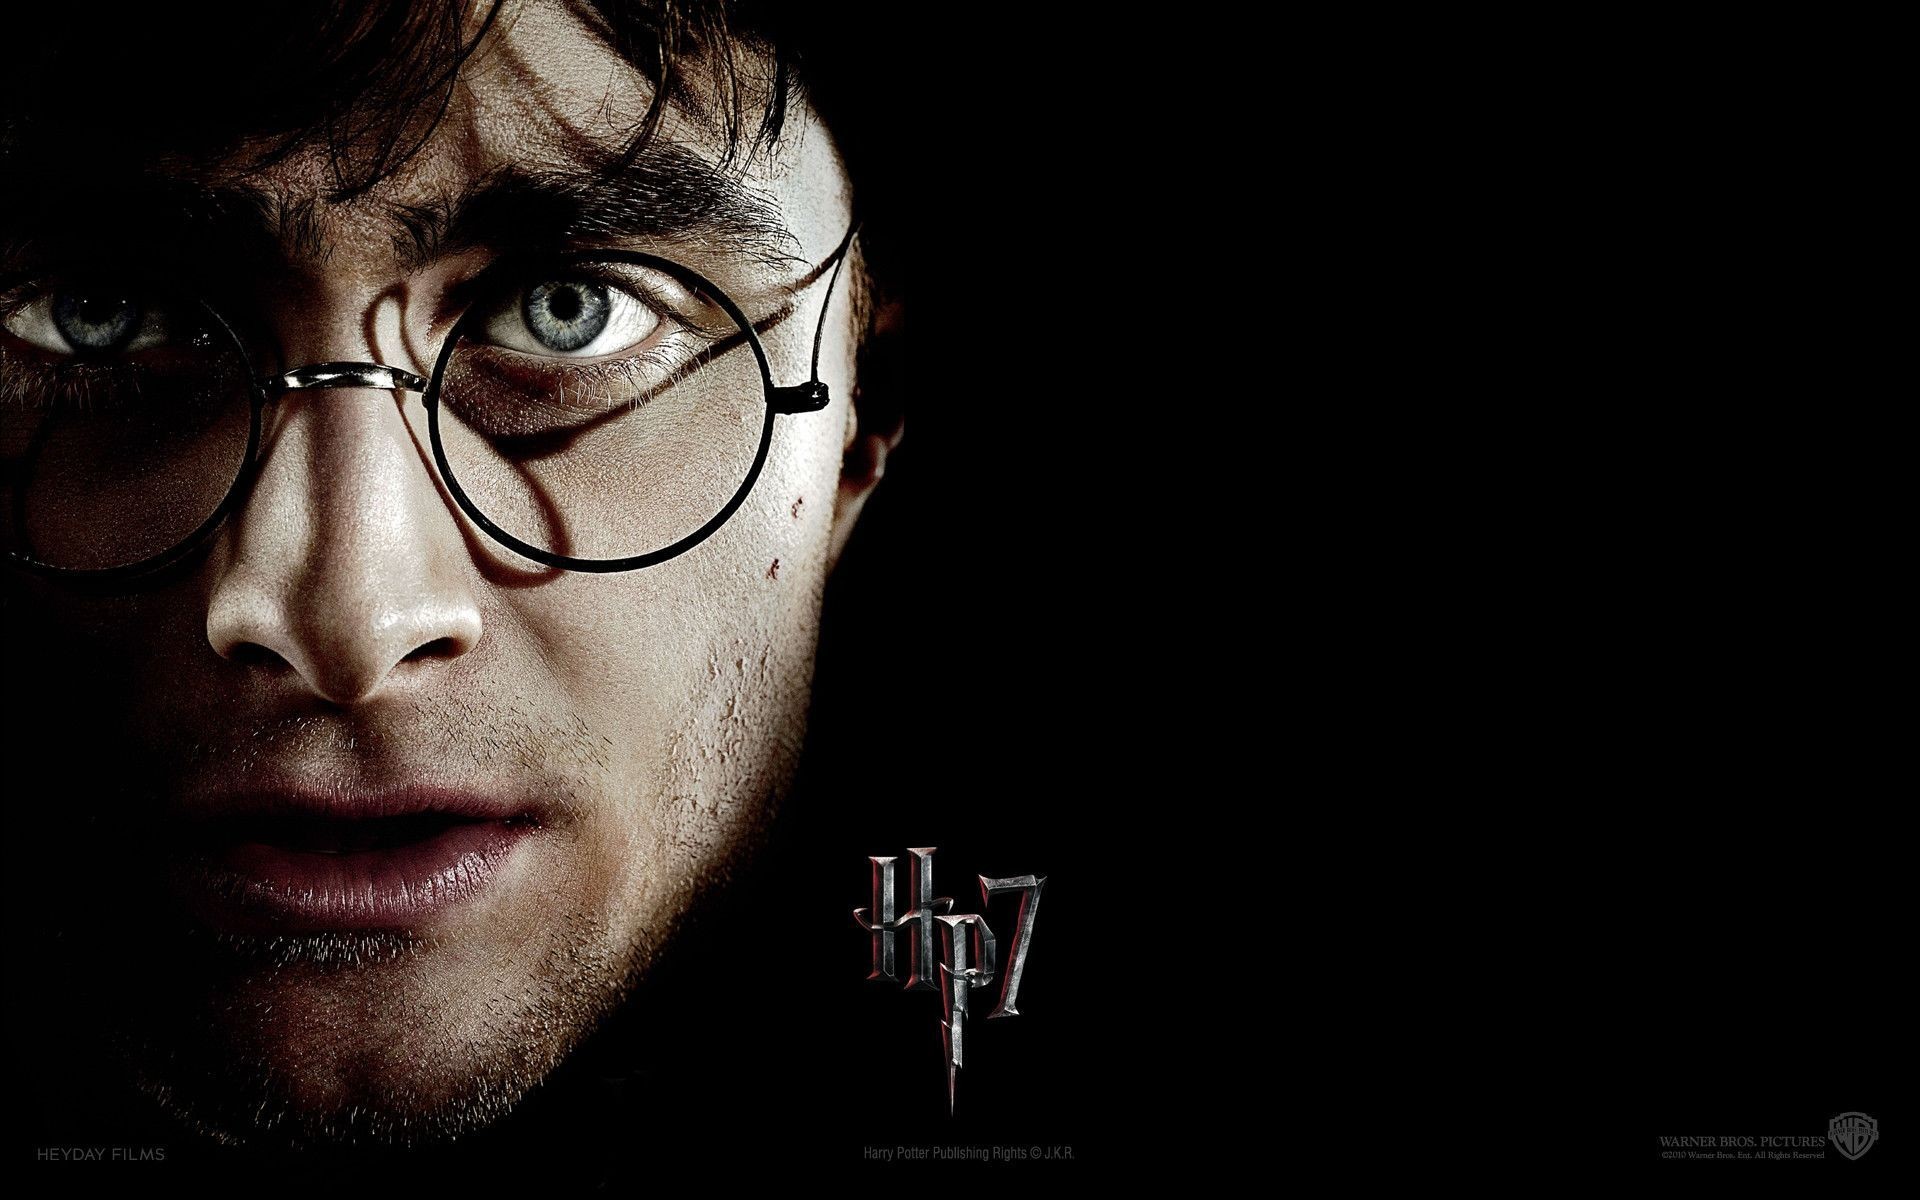 Best ideas about Harry Potter Wallpaper on Pinterest Harry